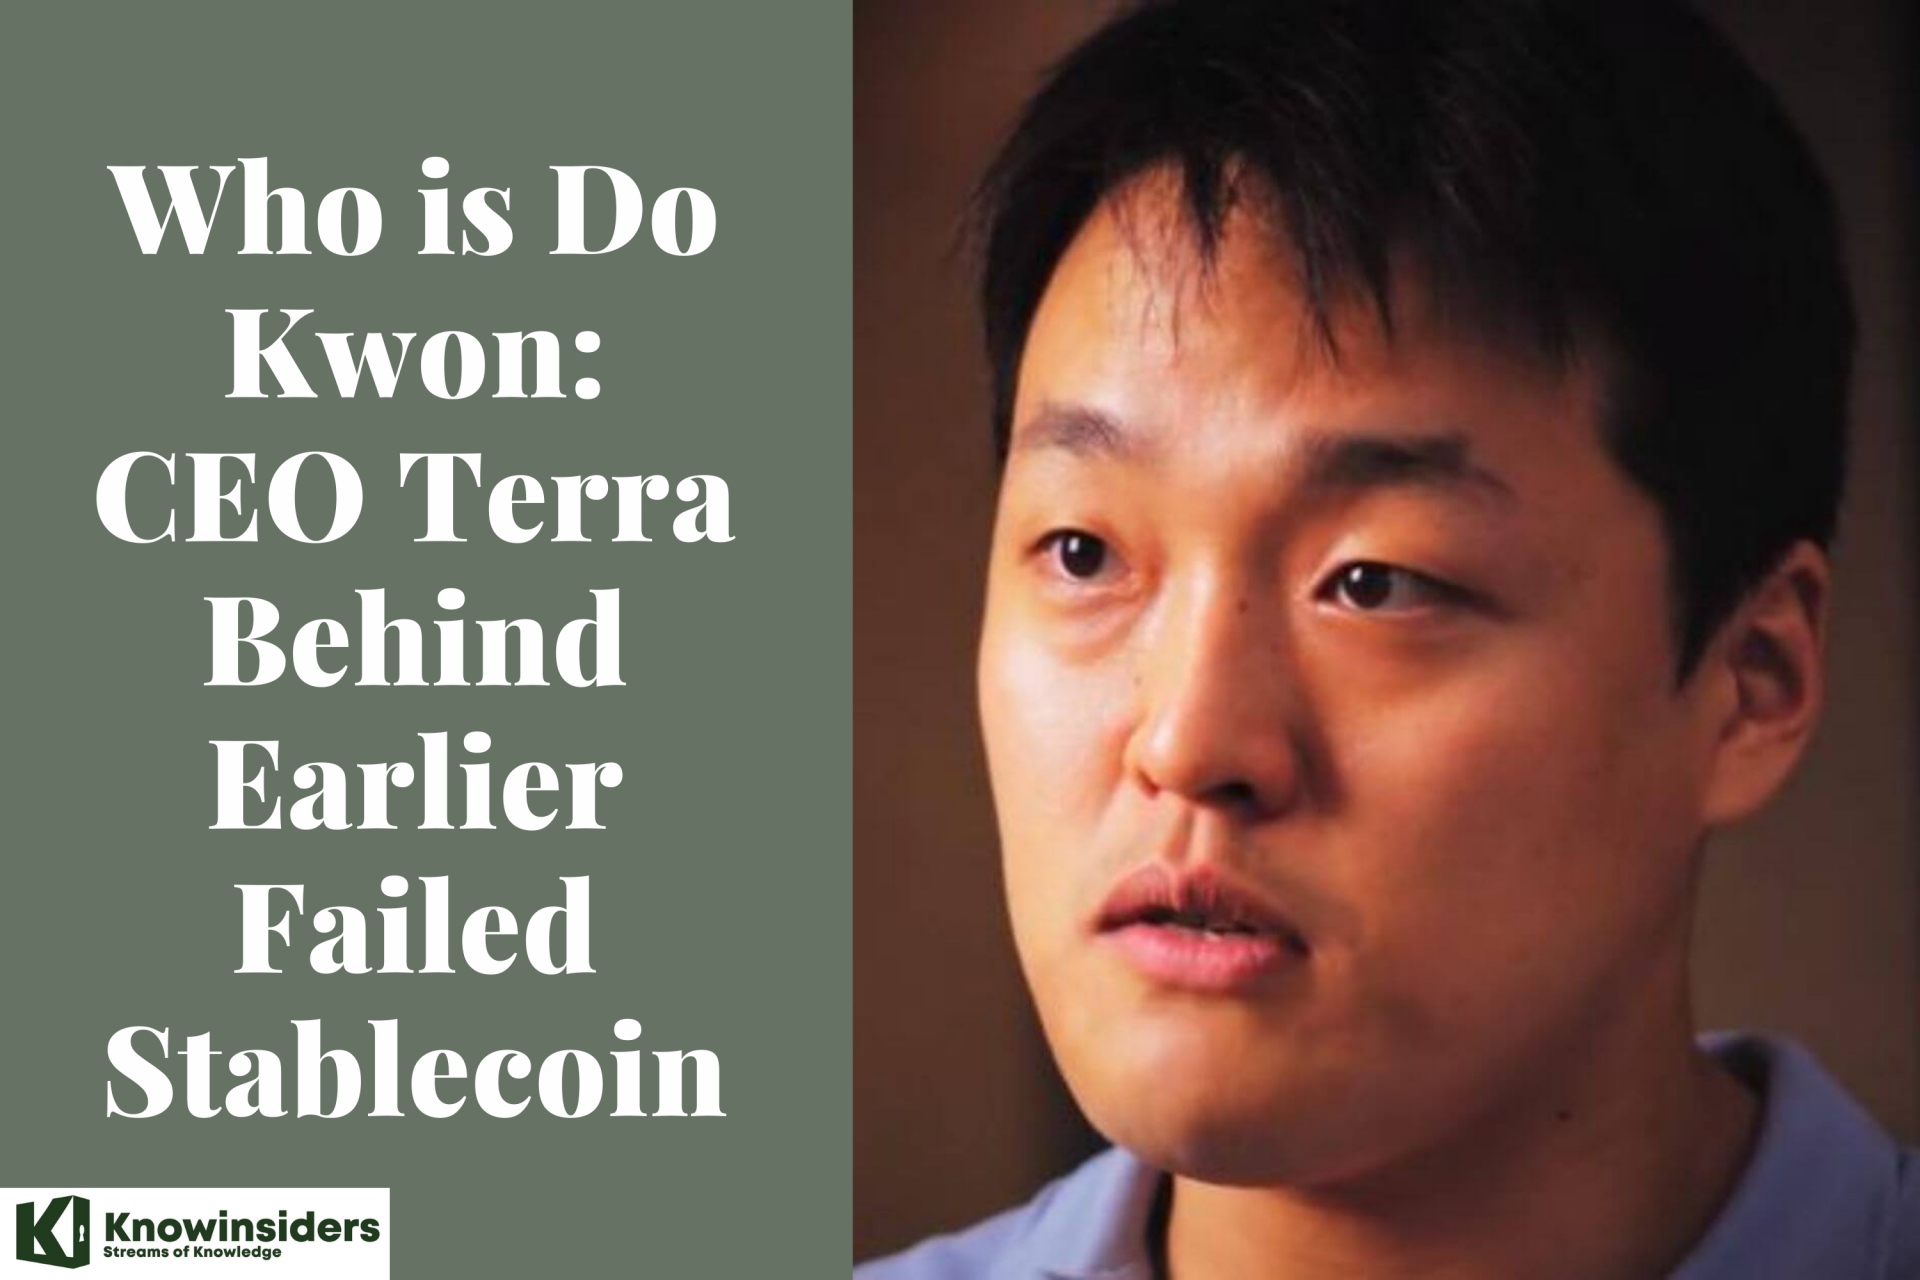 Who is Do Kwon: CEO Terra Behind Earlier Failed Stablecoin